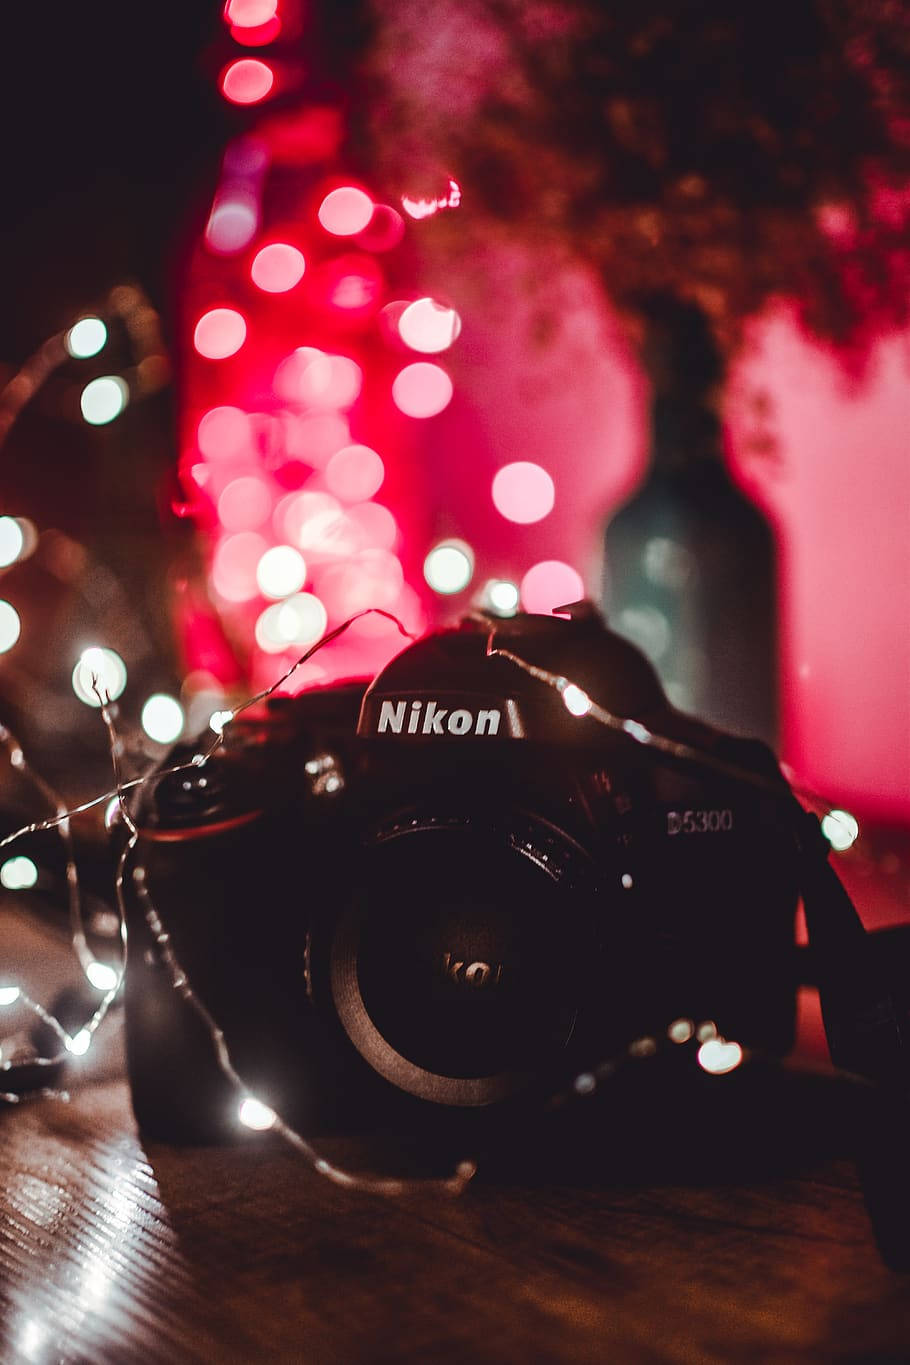 Dslr Blur Nikon Camera